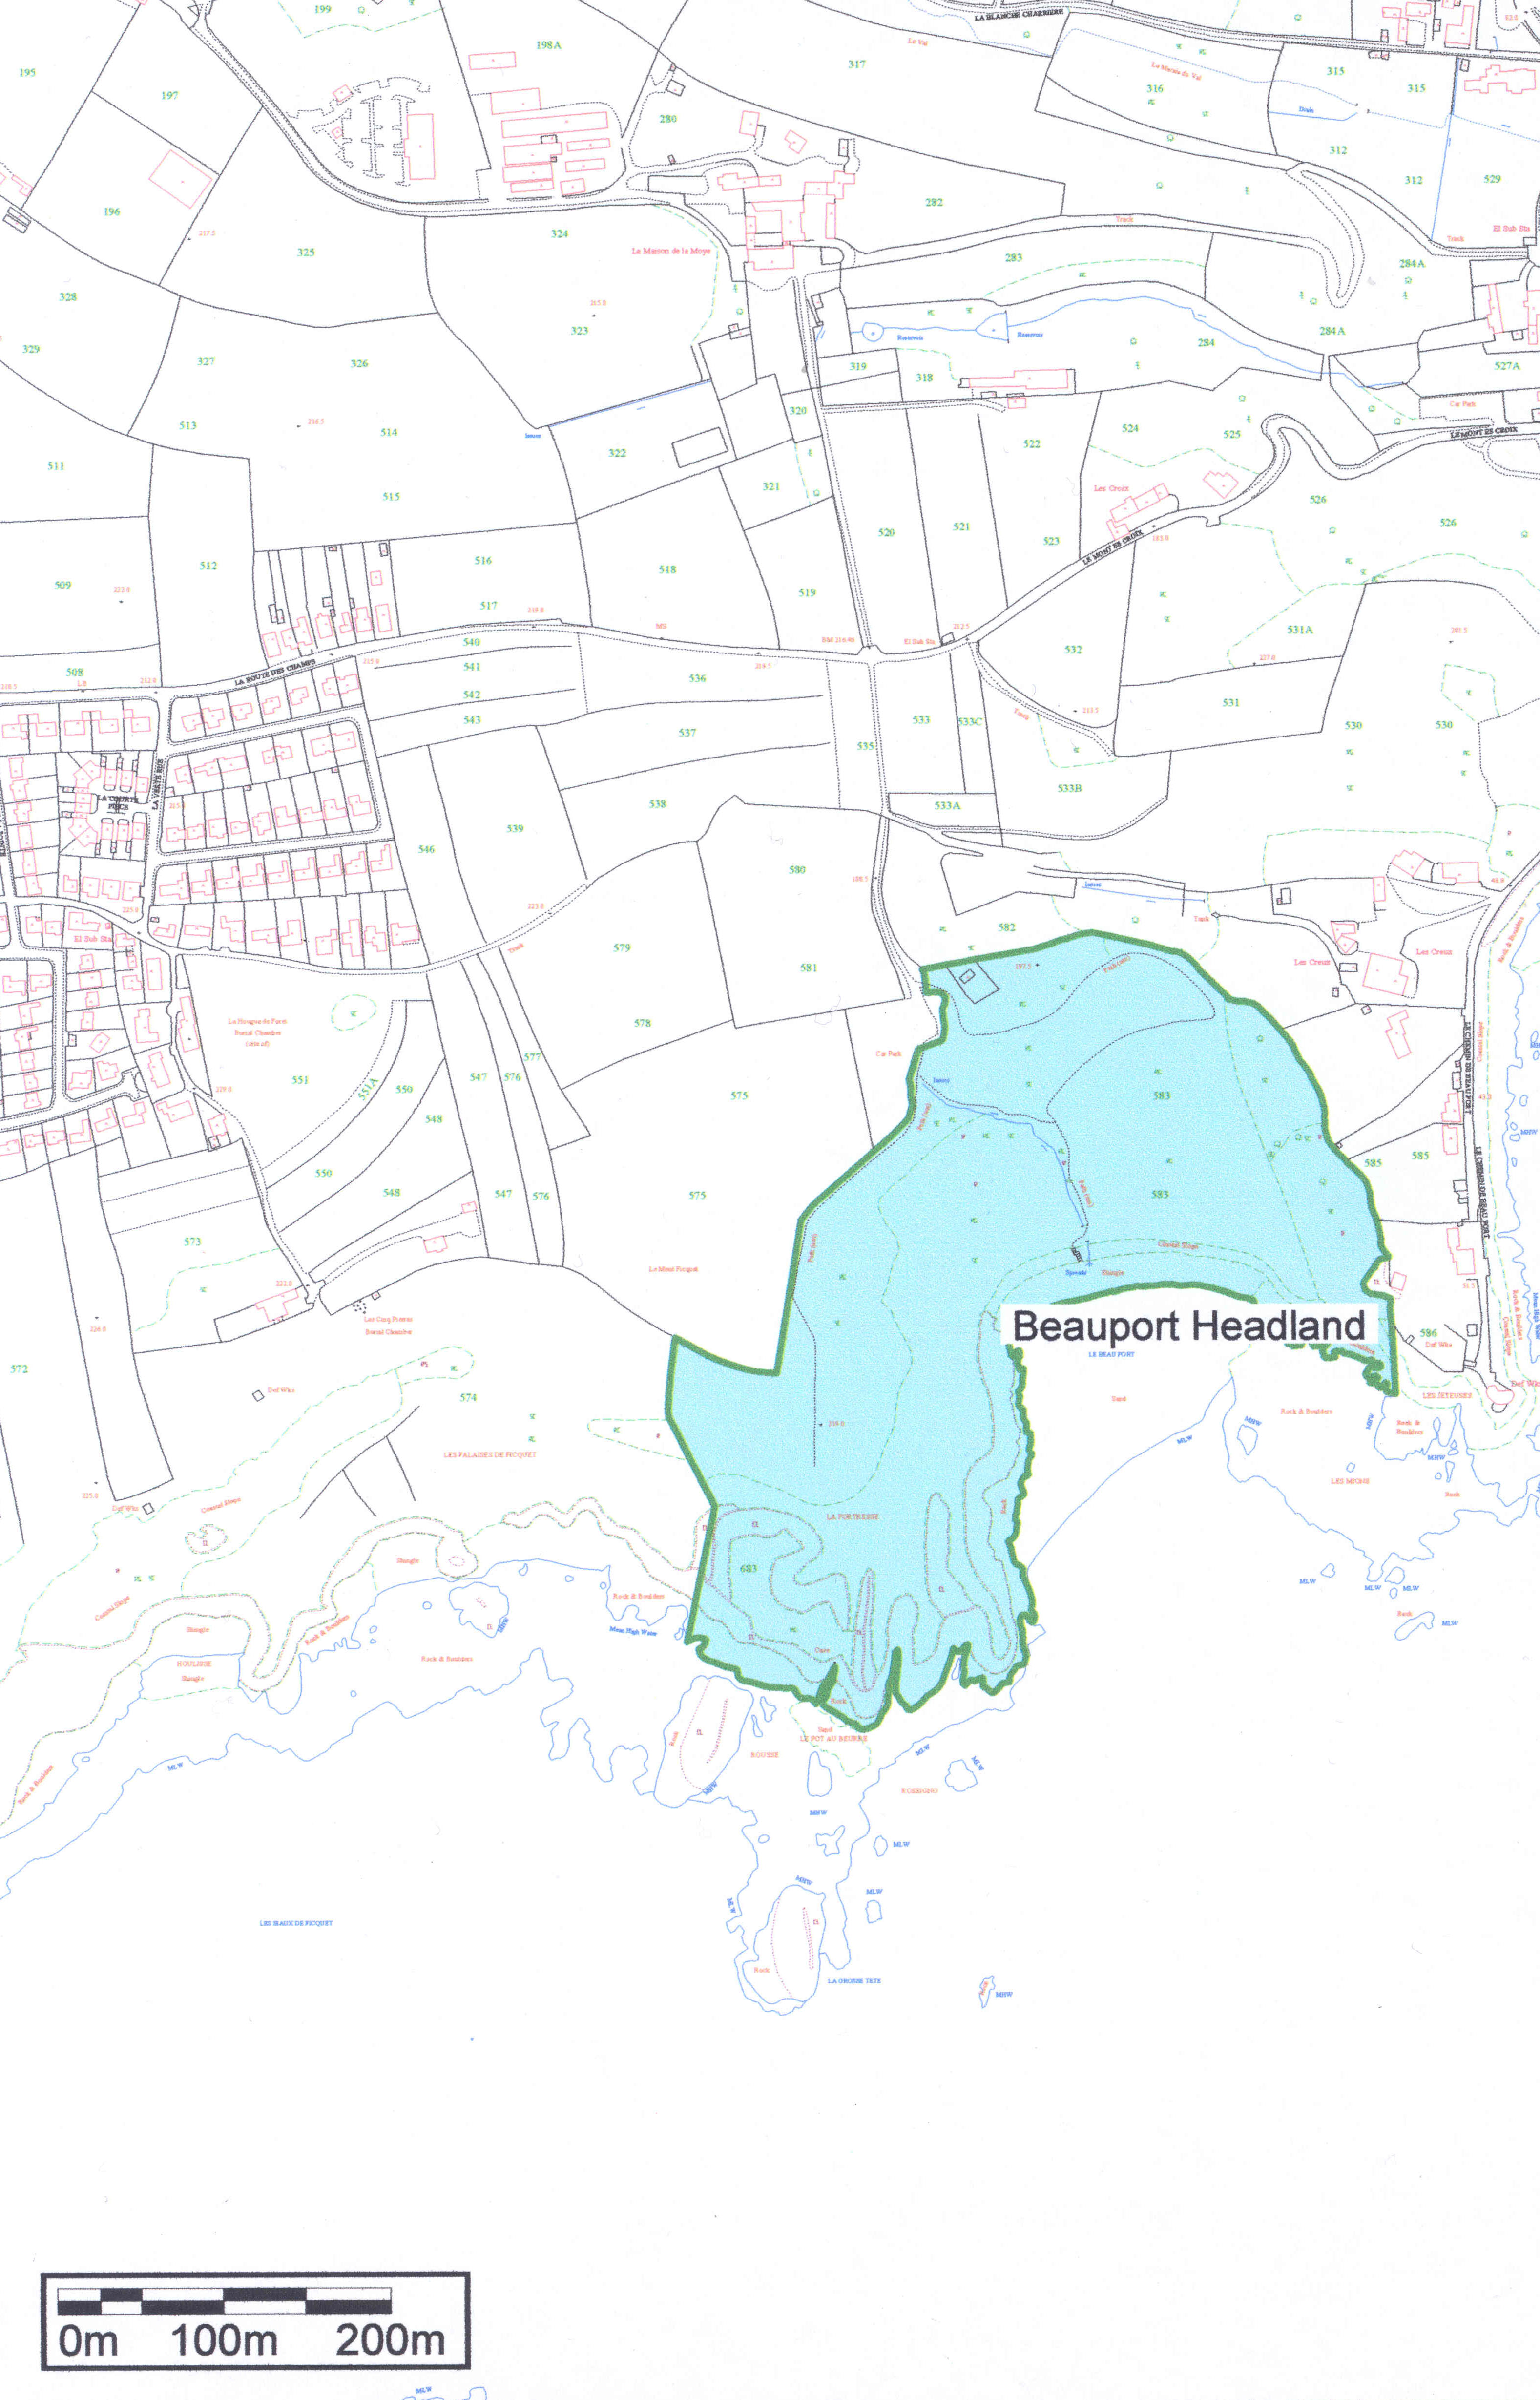 Part 3 - map of Beauport Headland